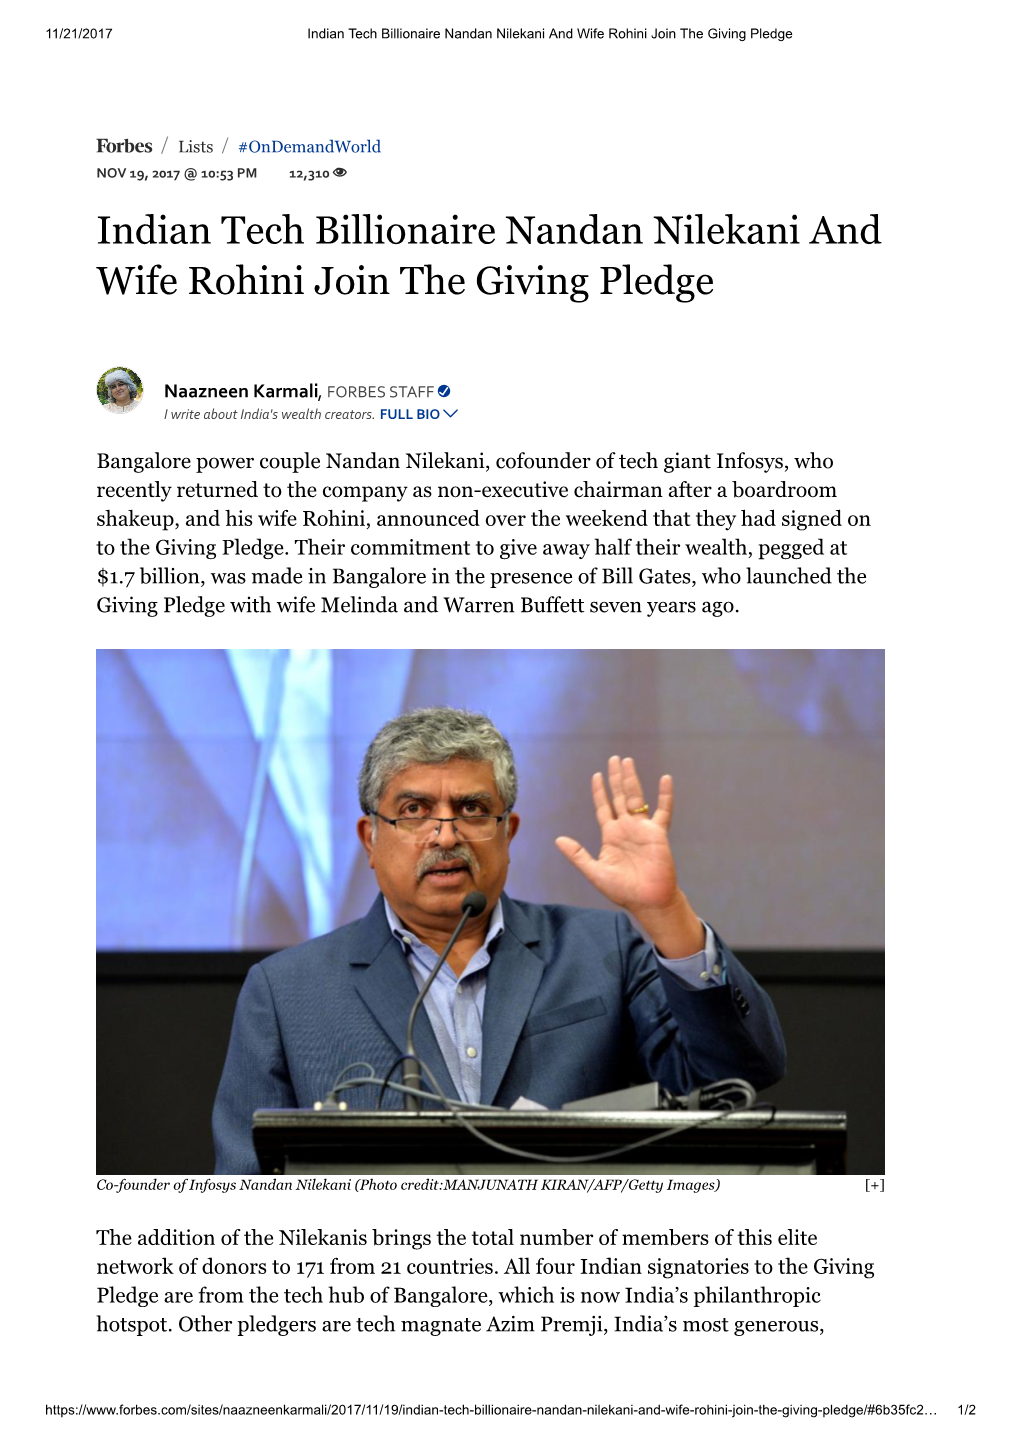 Indian Tech Billionaire Nandan Nilekani and Wife Rohini Join the Giving Pledge